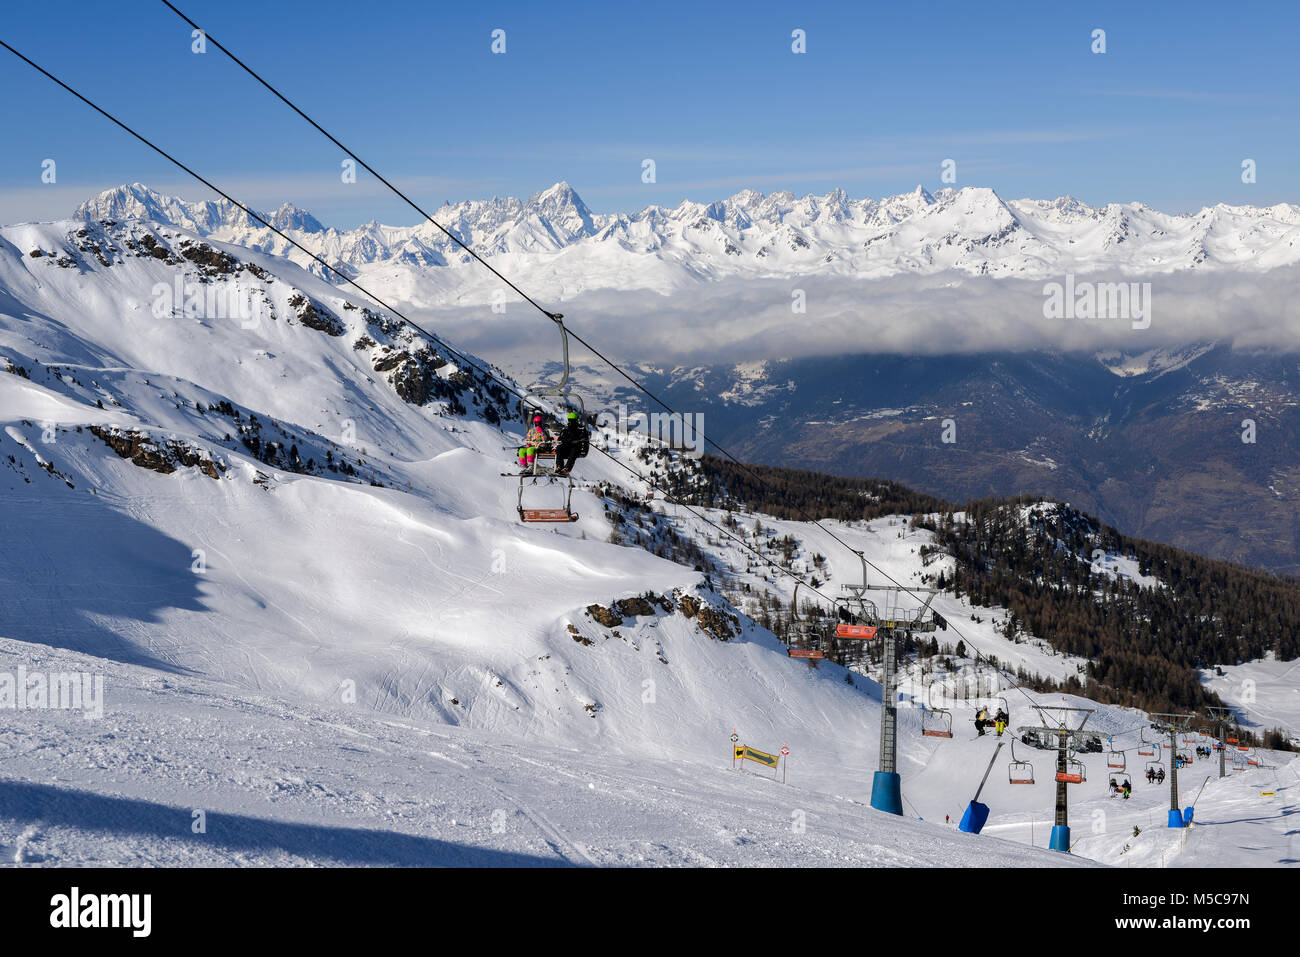 Pila, Aosta, Italy - Feb 19, 2018: Chairlift at Italian ski area ...